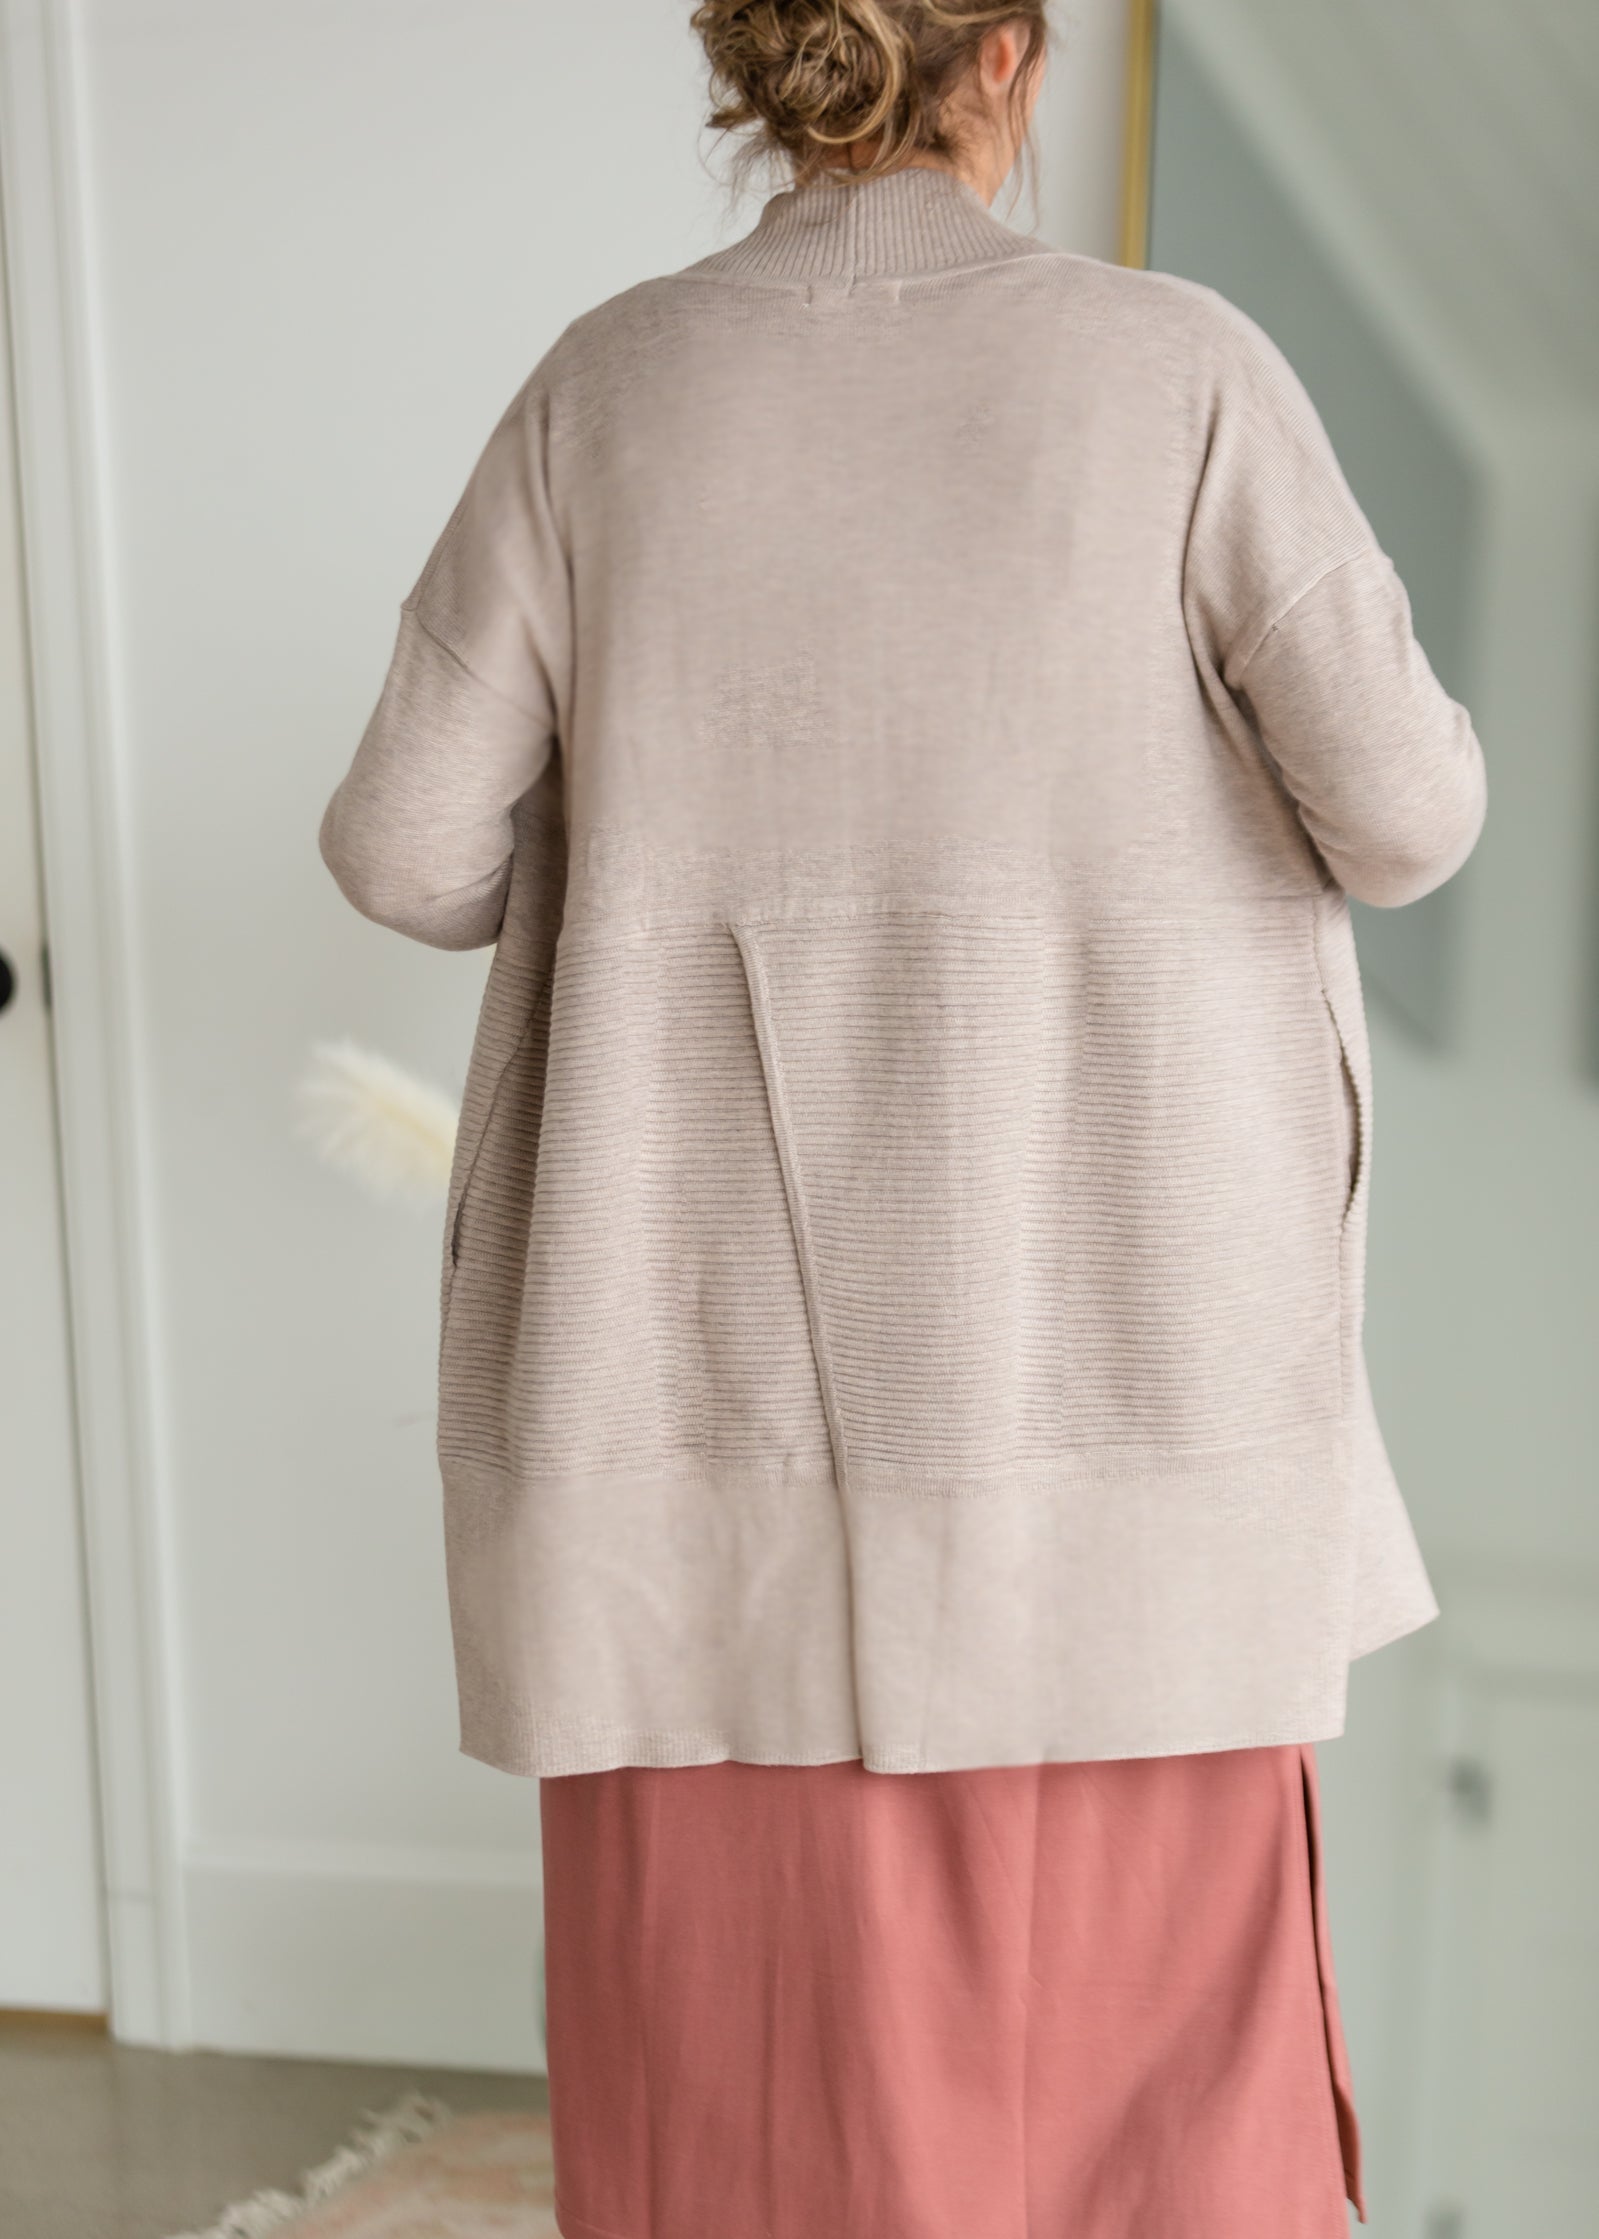 Vented Back Ribbed Long Sleeve Cardigan Shirt Mod Ref